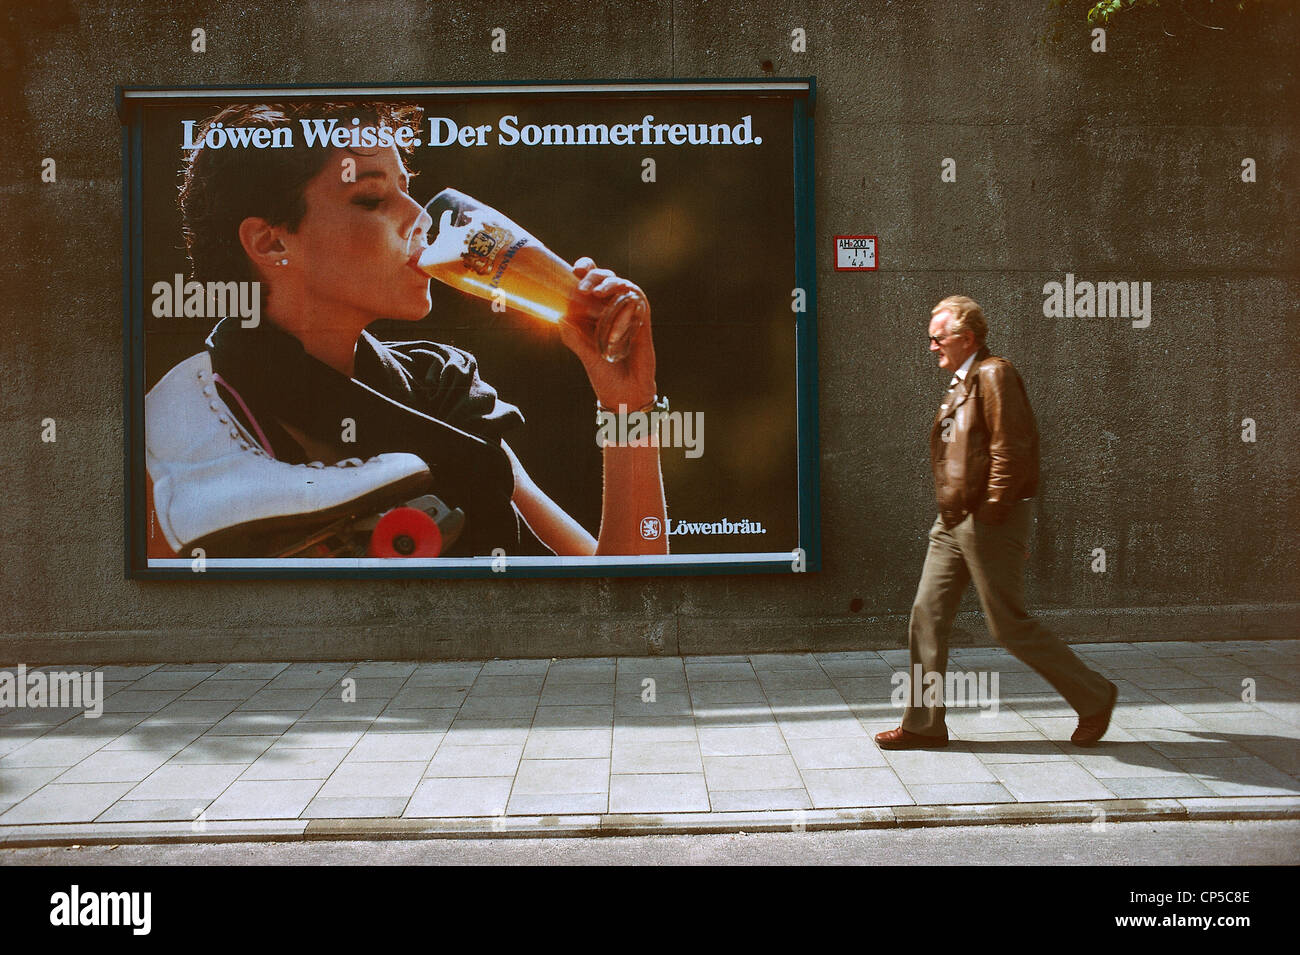 Germany - Monaco. Lowenbrau beer billboard in a street Stock Photo